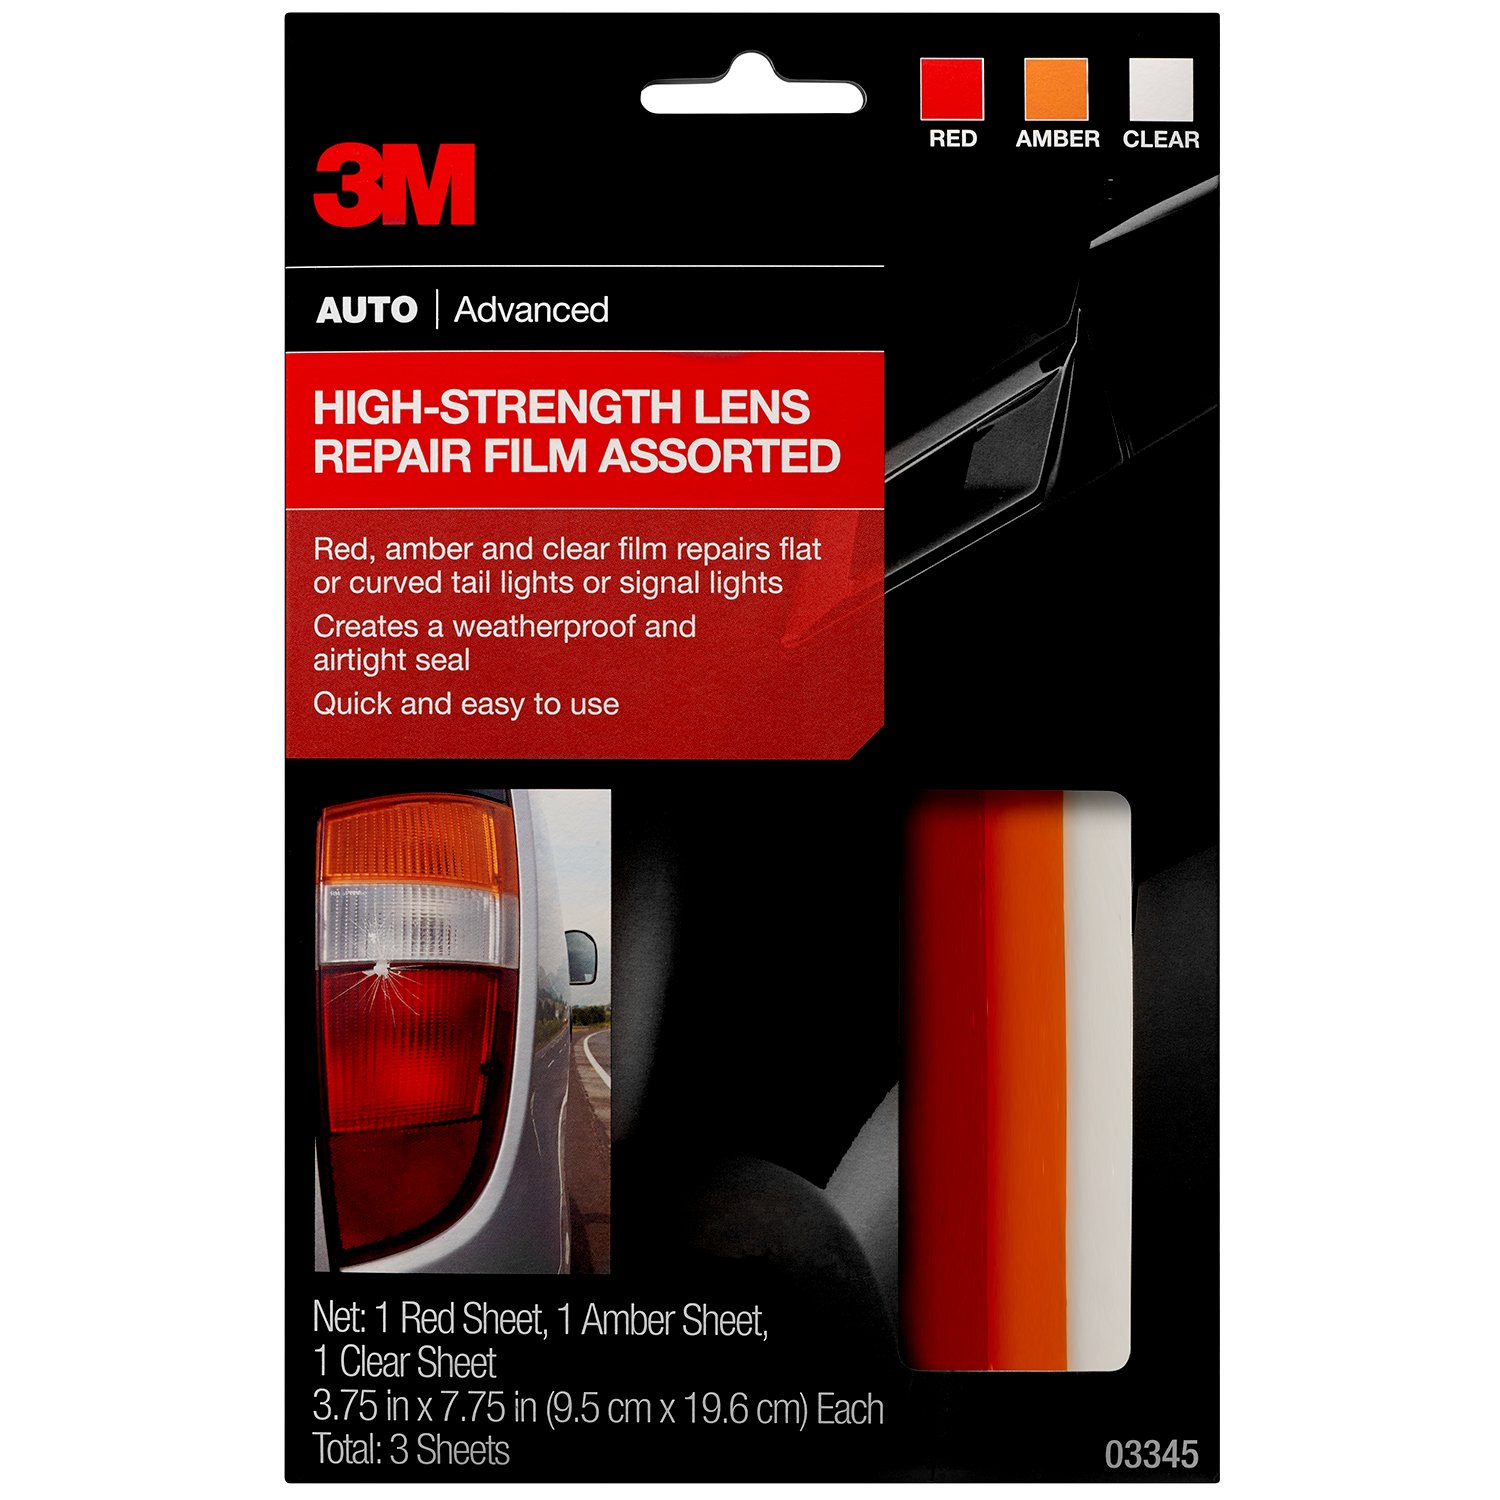 7100139908 - 3M High-Strength Lens Repair Film Assorted, 03345, 3.75 in x 7.75 in,
24 per case